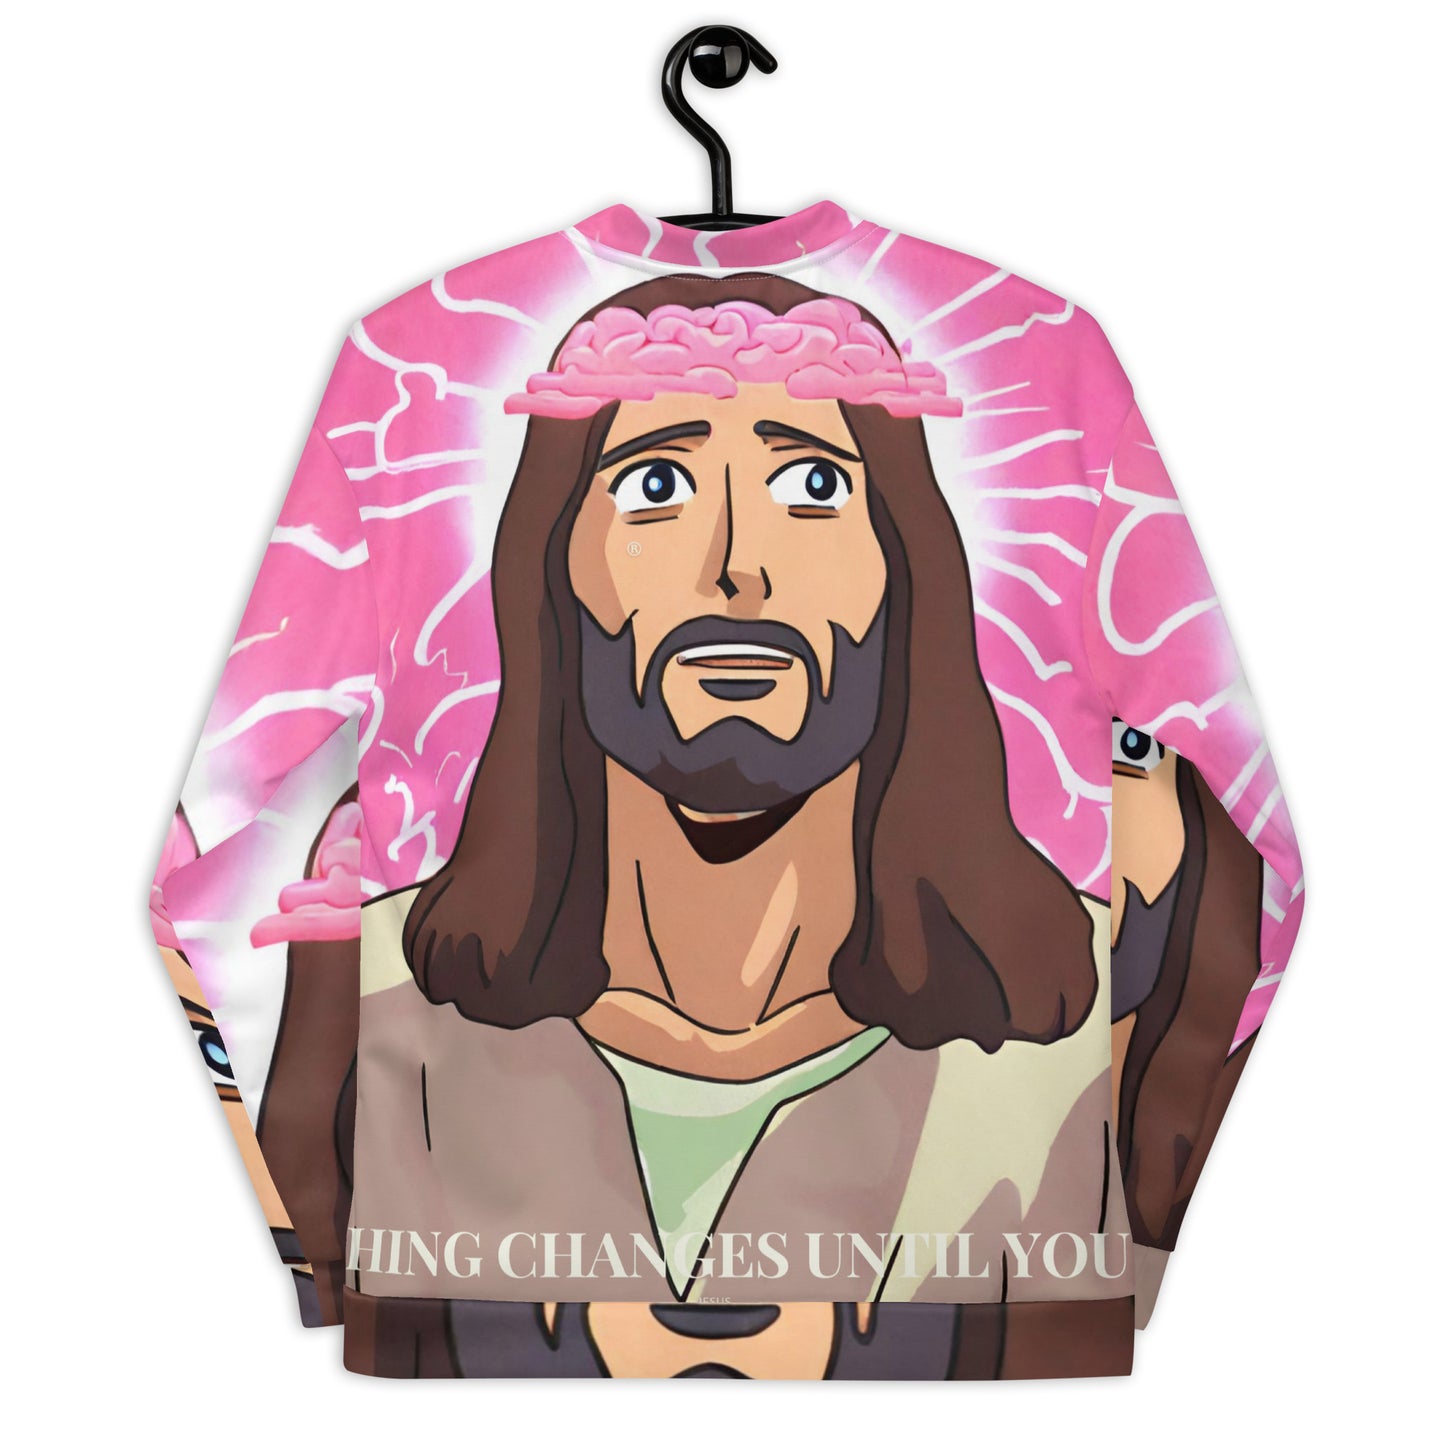 Jesus knew Bomber Jacket